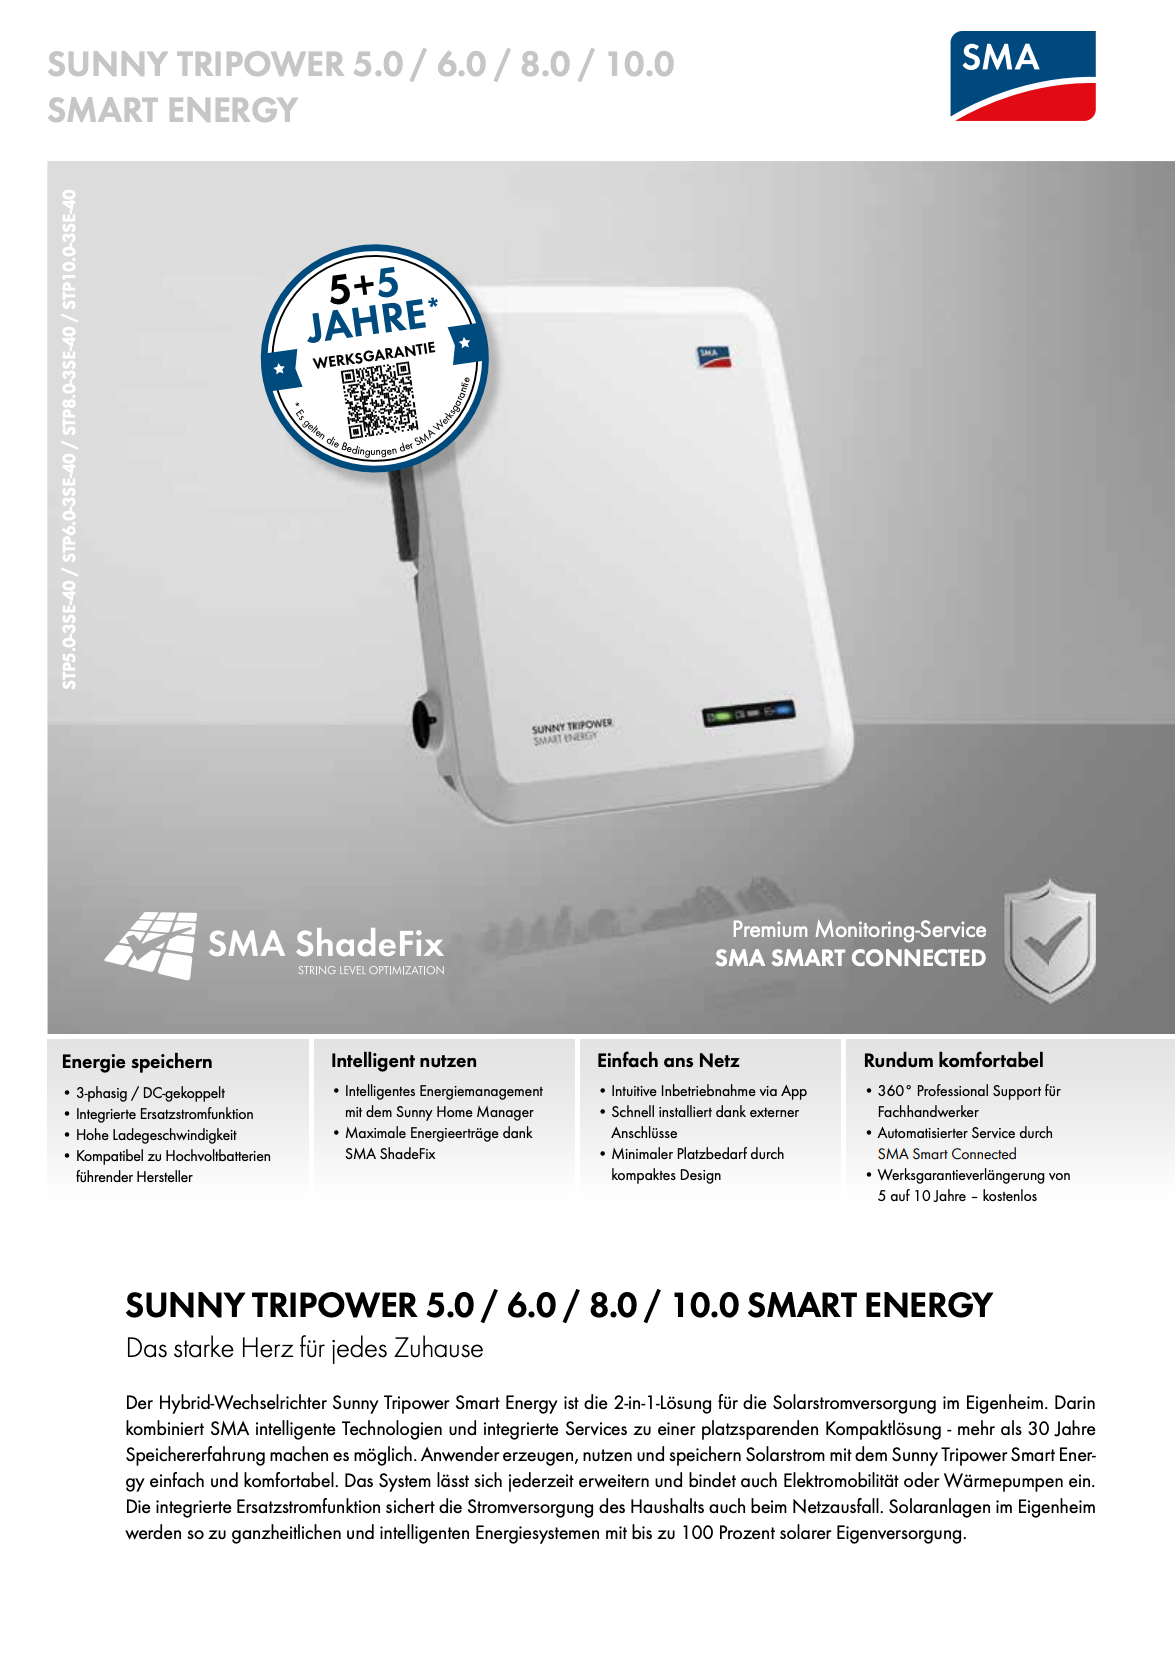 SMA STP Sunny Tripower Smart Energy alle Größen Hybridwechselrichter